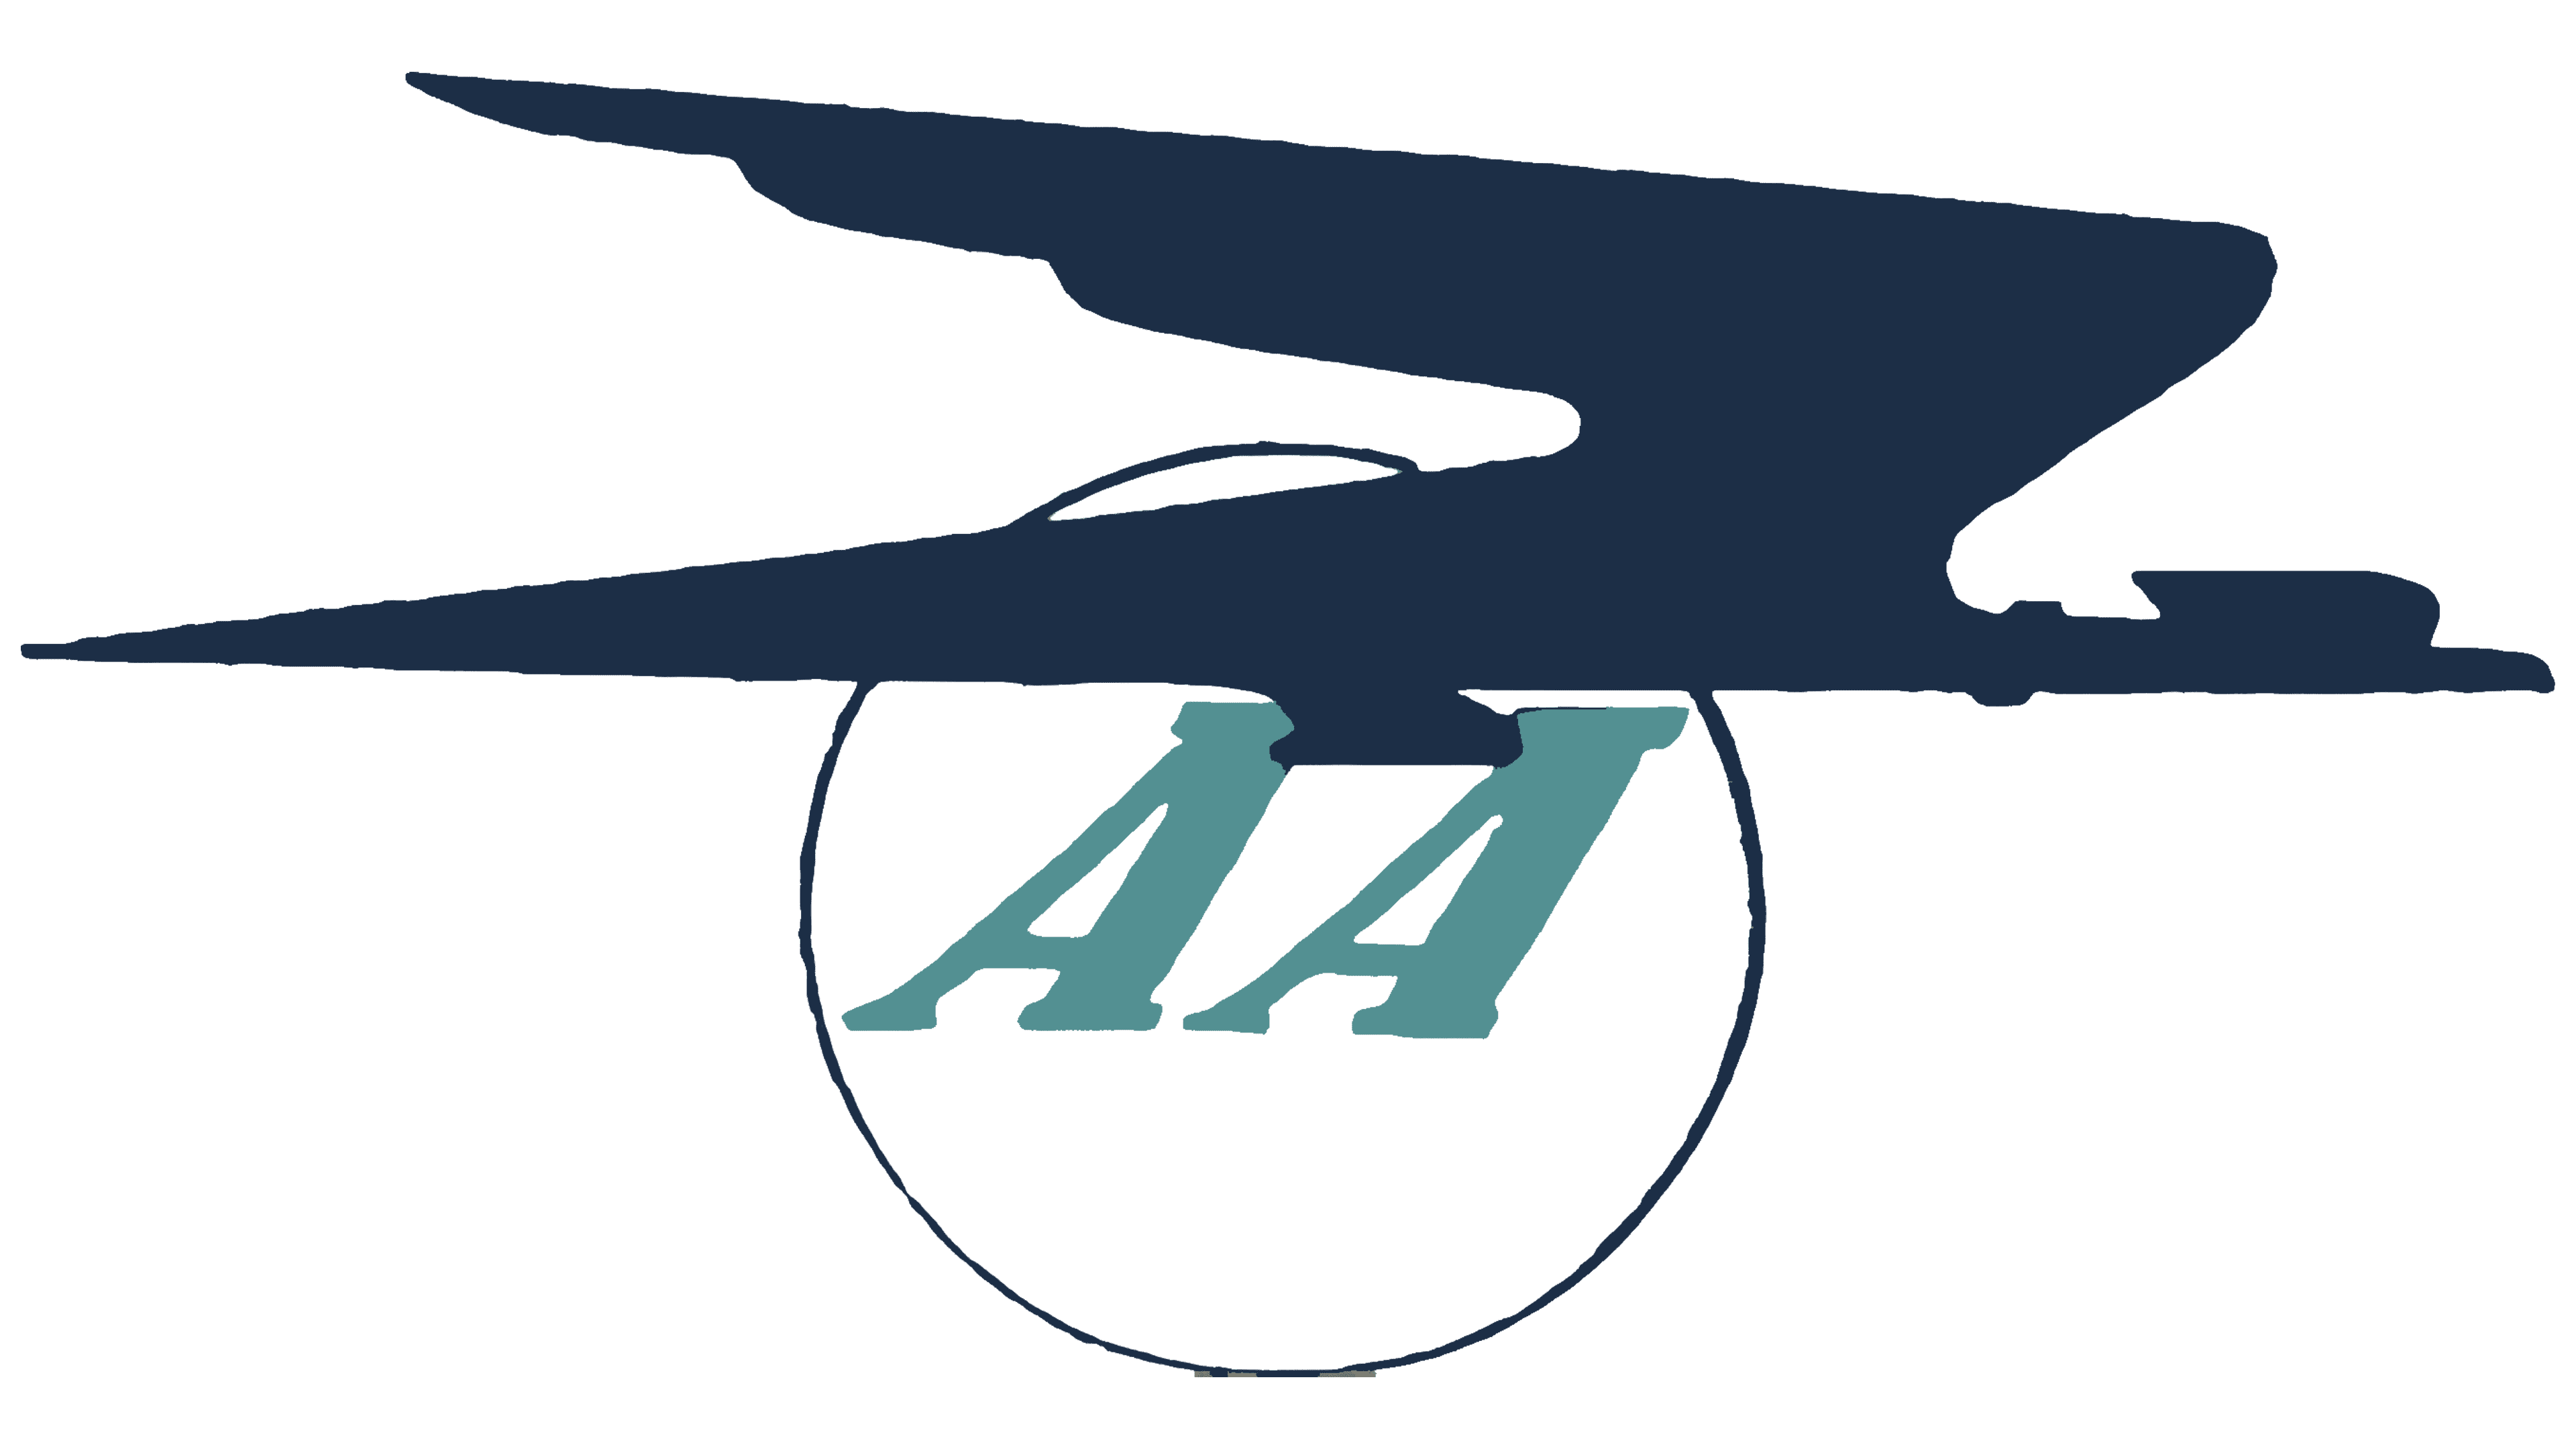 Aerolíneas Argentinas Logo, symbol, meaning, history, PNG, brand